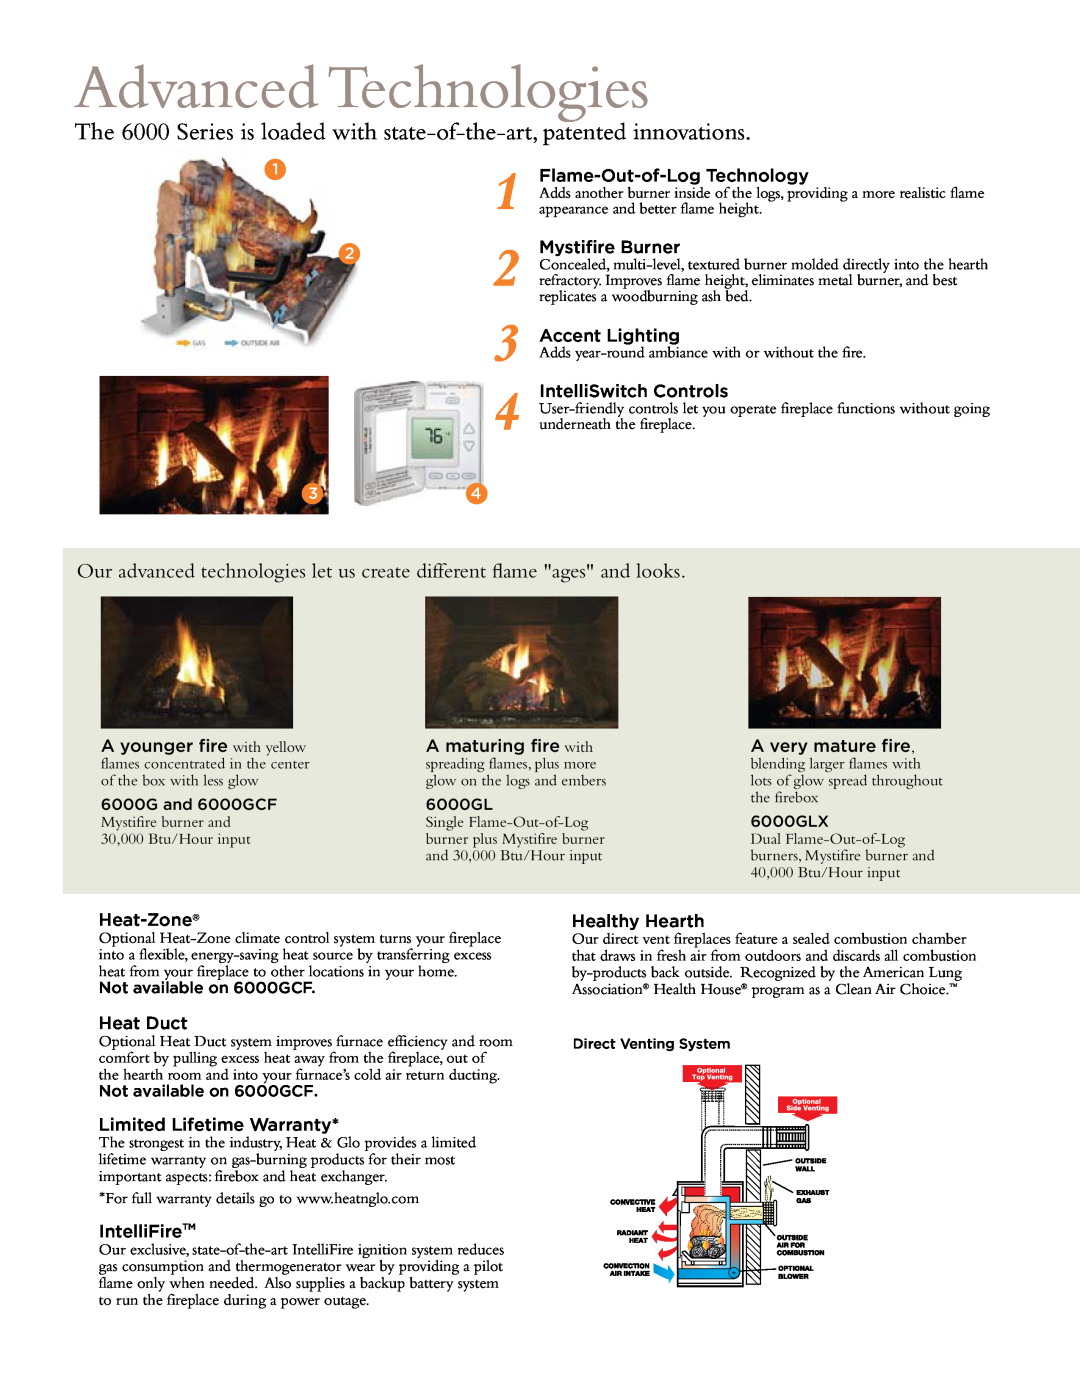 Heat & Glo LifeStyle 6000 Series Heat-Zone, Heat Duct, Limited Lifetime Warranty, IntelliFireTM, Healthy Hearth, 6000GL 